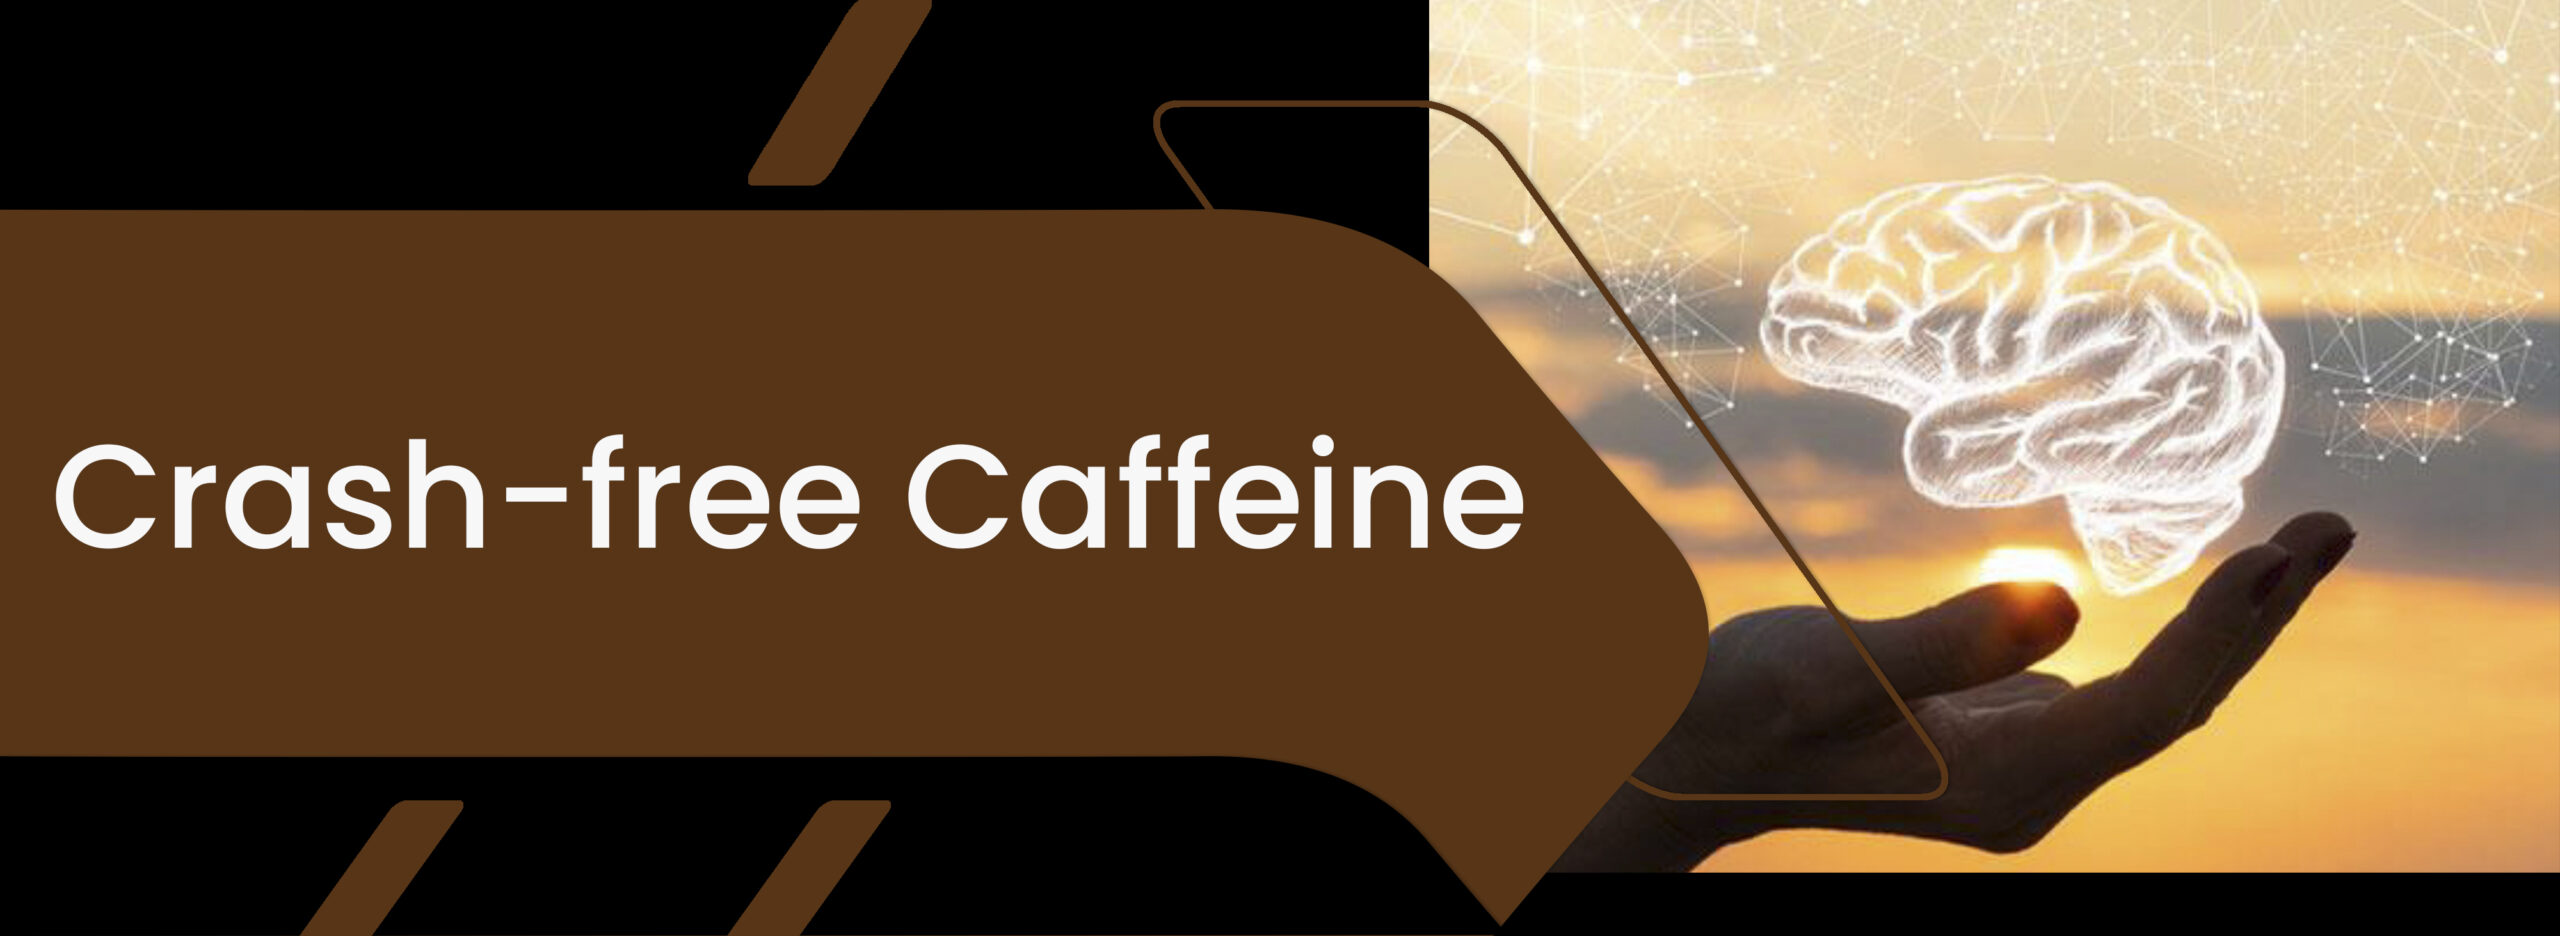 caffeine-homepage-2